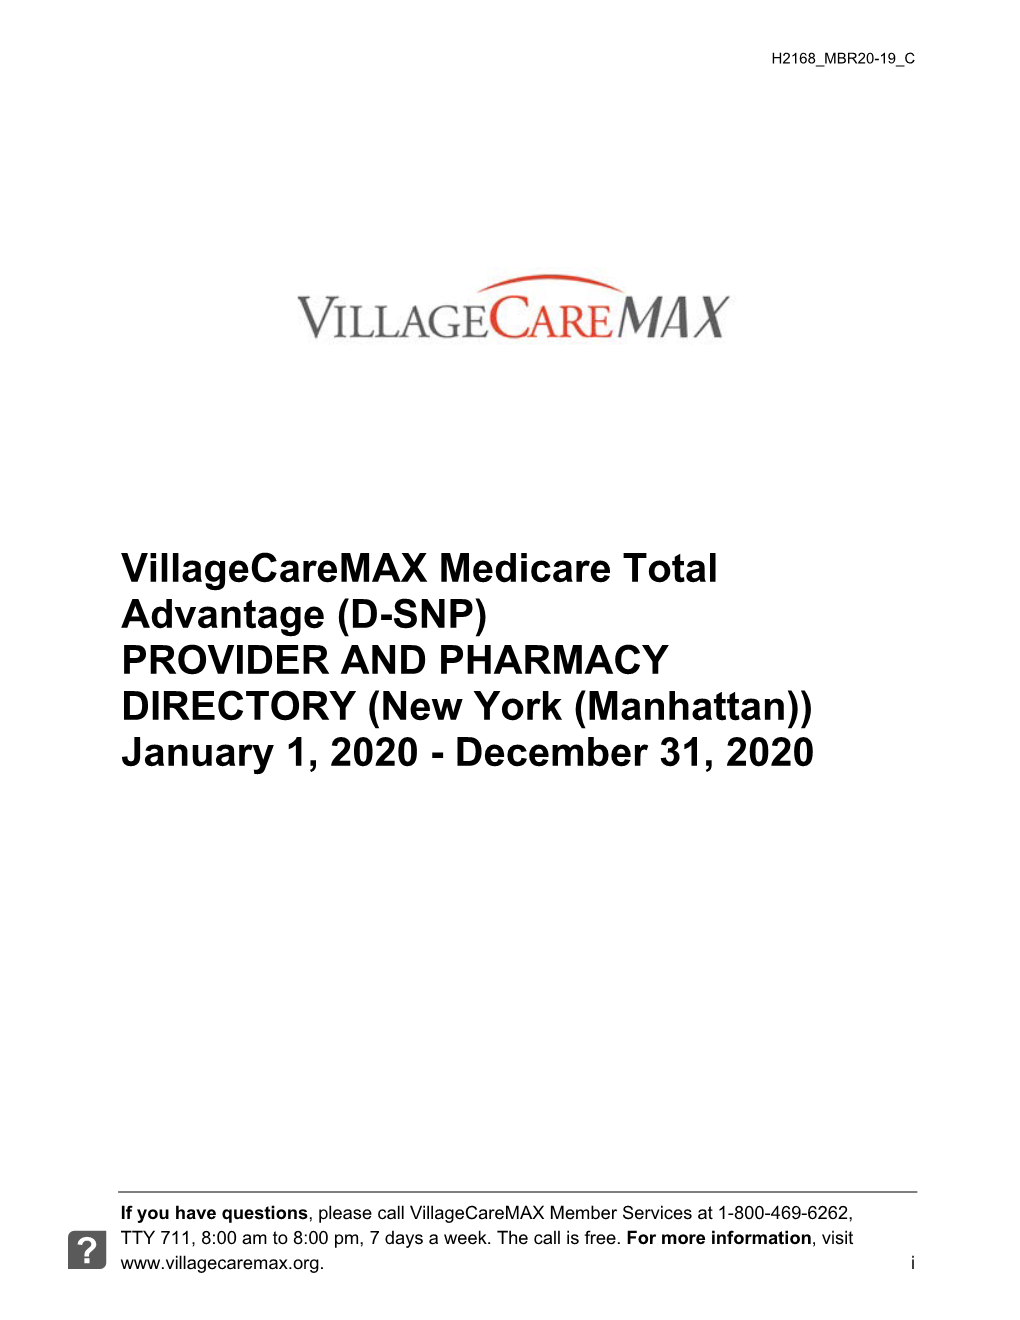 Villagecaremax Medicare Total Advantage (D-SNP) PROVIDER and PHARMACY DIRECTORY (New York (Manhattan)) January 1, 2020 - December 31, 2020